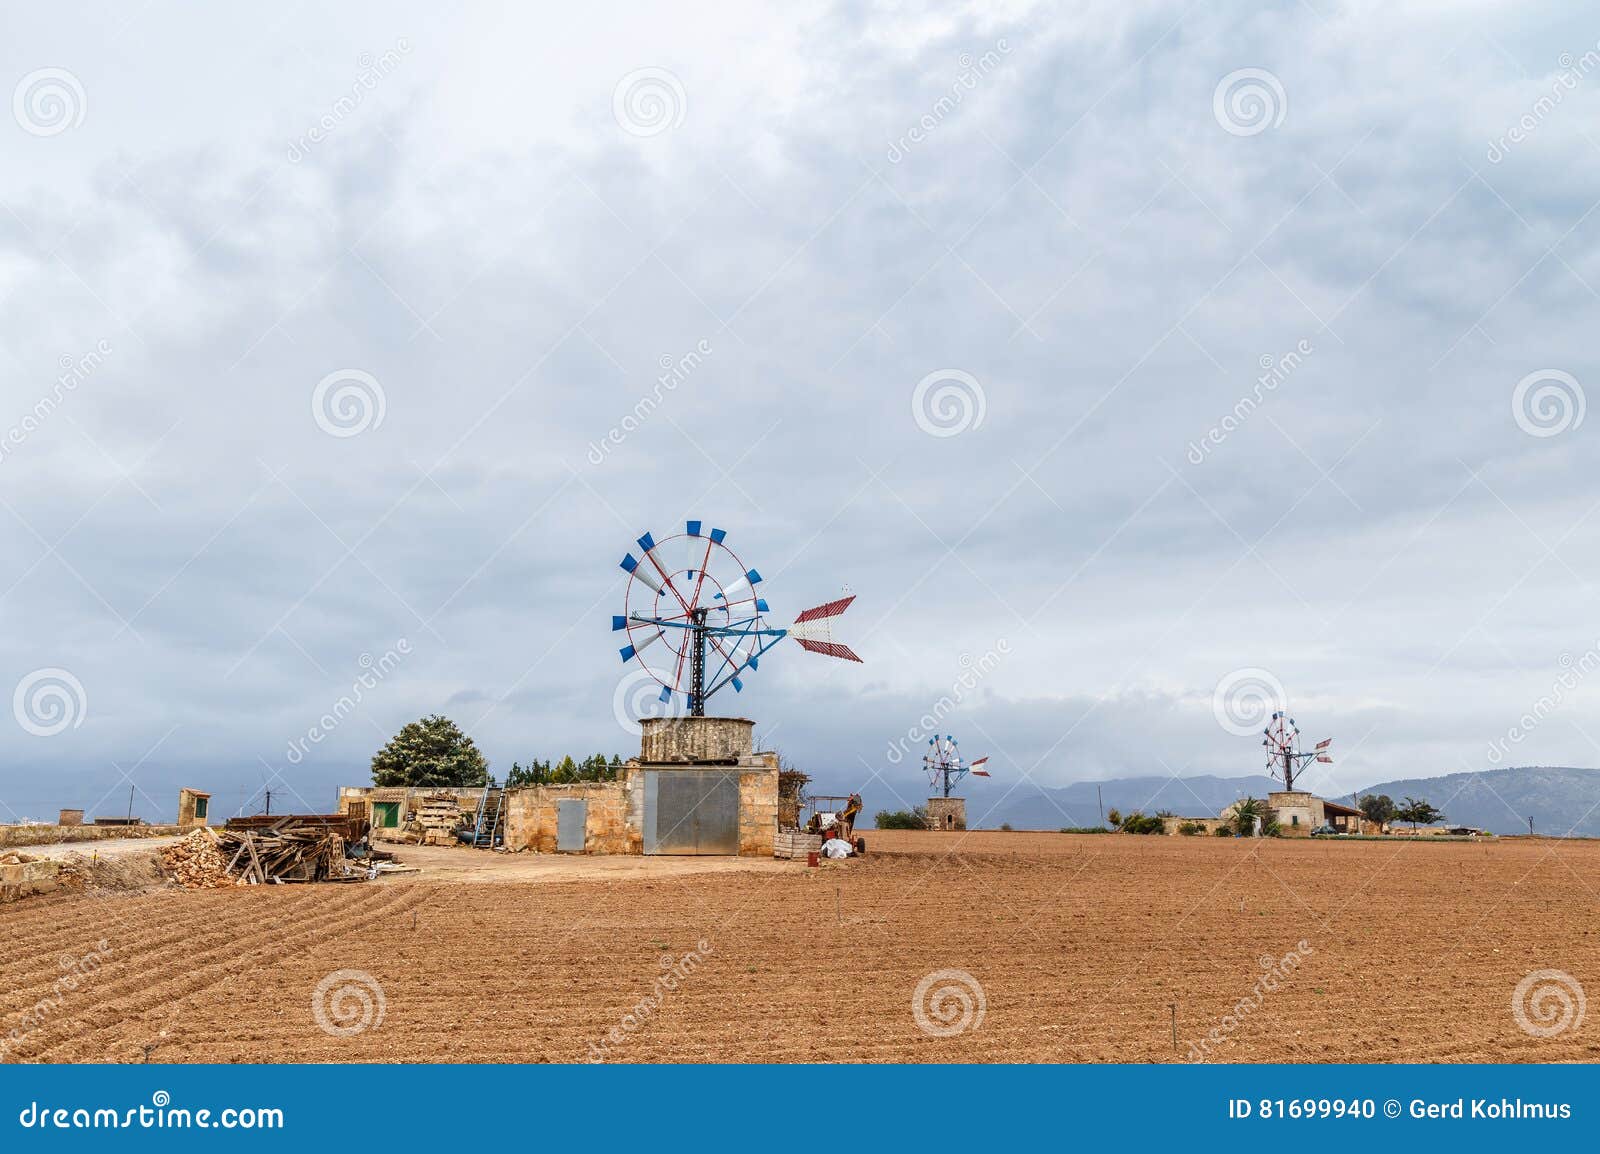 windmills in mallorca